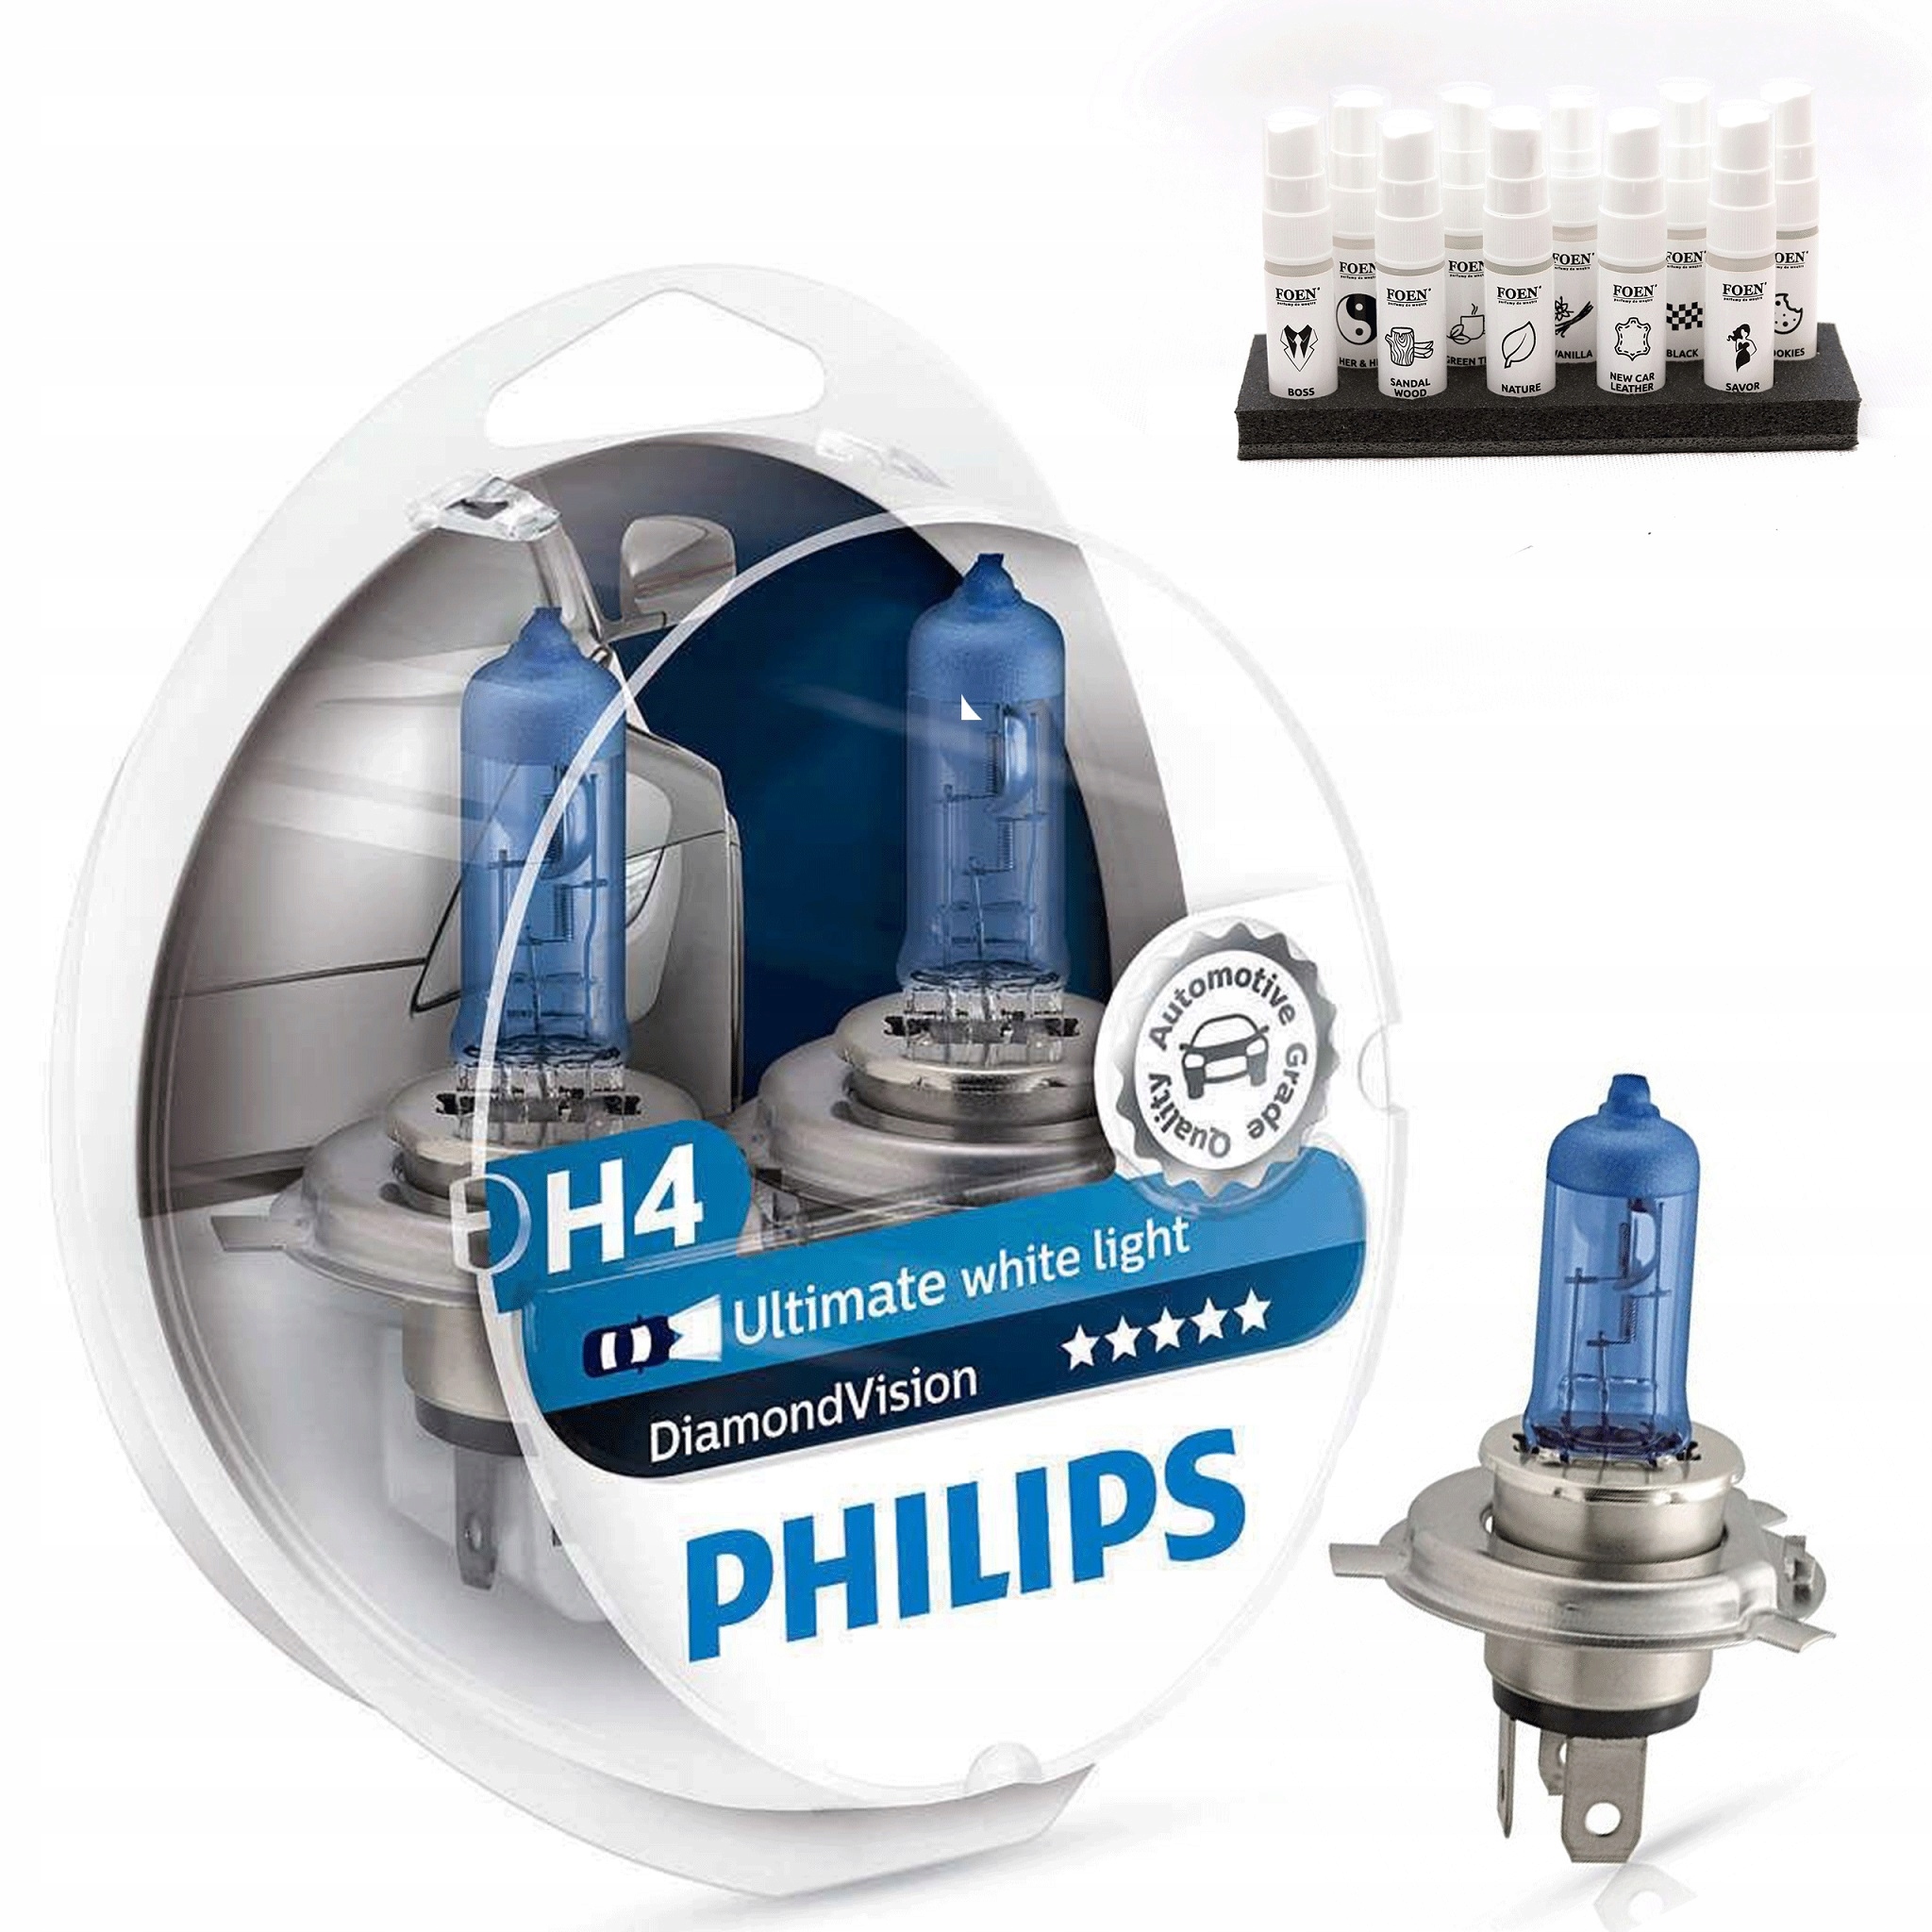 Филипс 150. Лампа h4 x-treme Vision pro150 s2 2шт. Philips x-treme Vision Pro 150 h4. Лампы Philips long laif h7 купить. Лампочка Филипс купить.